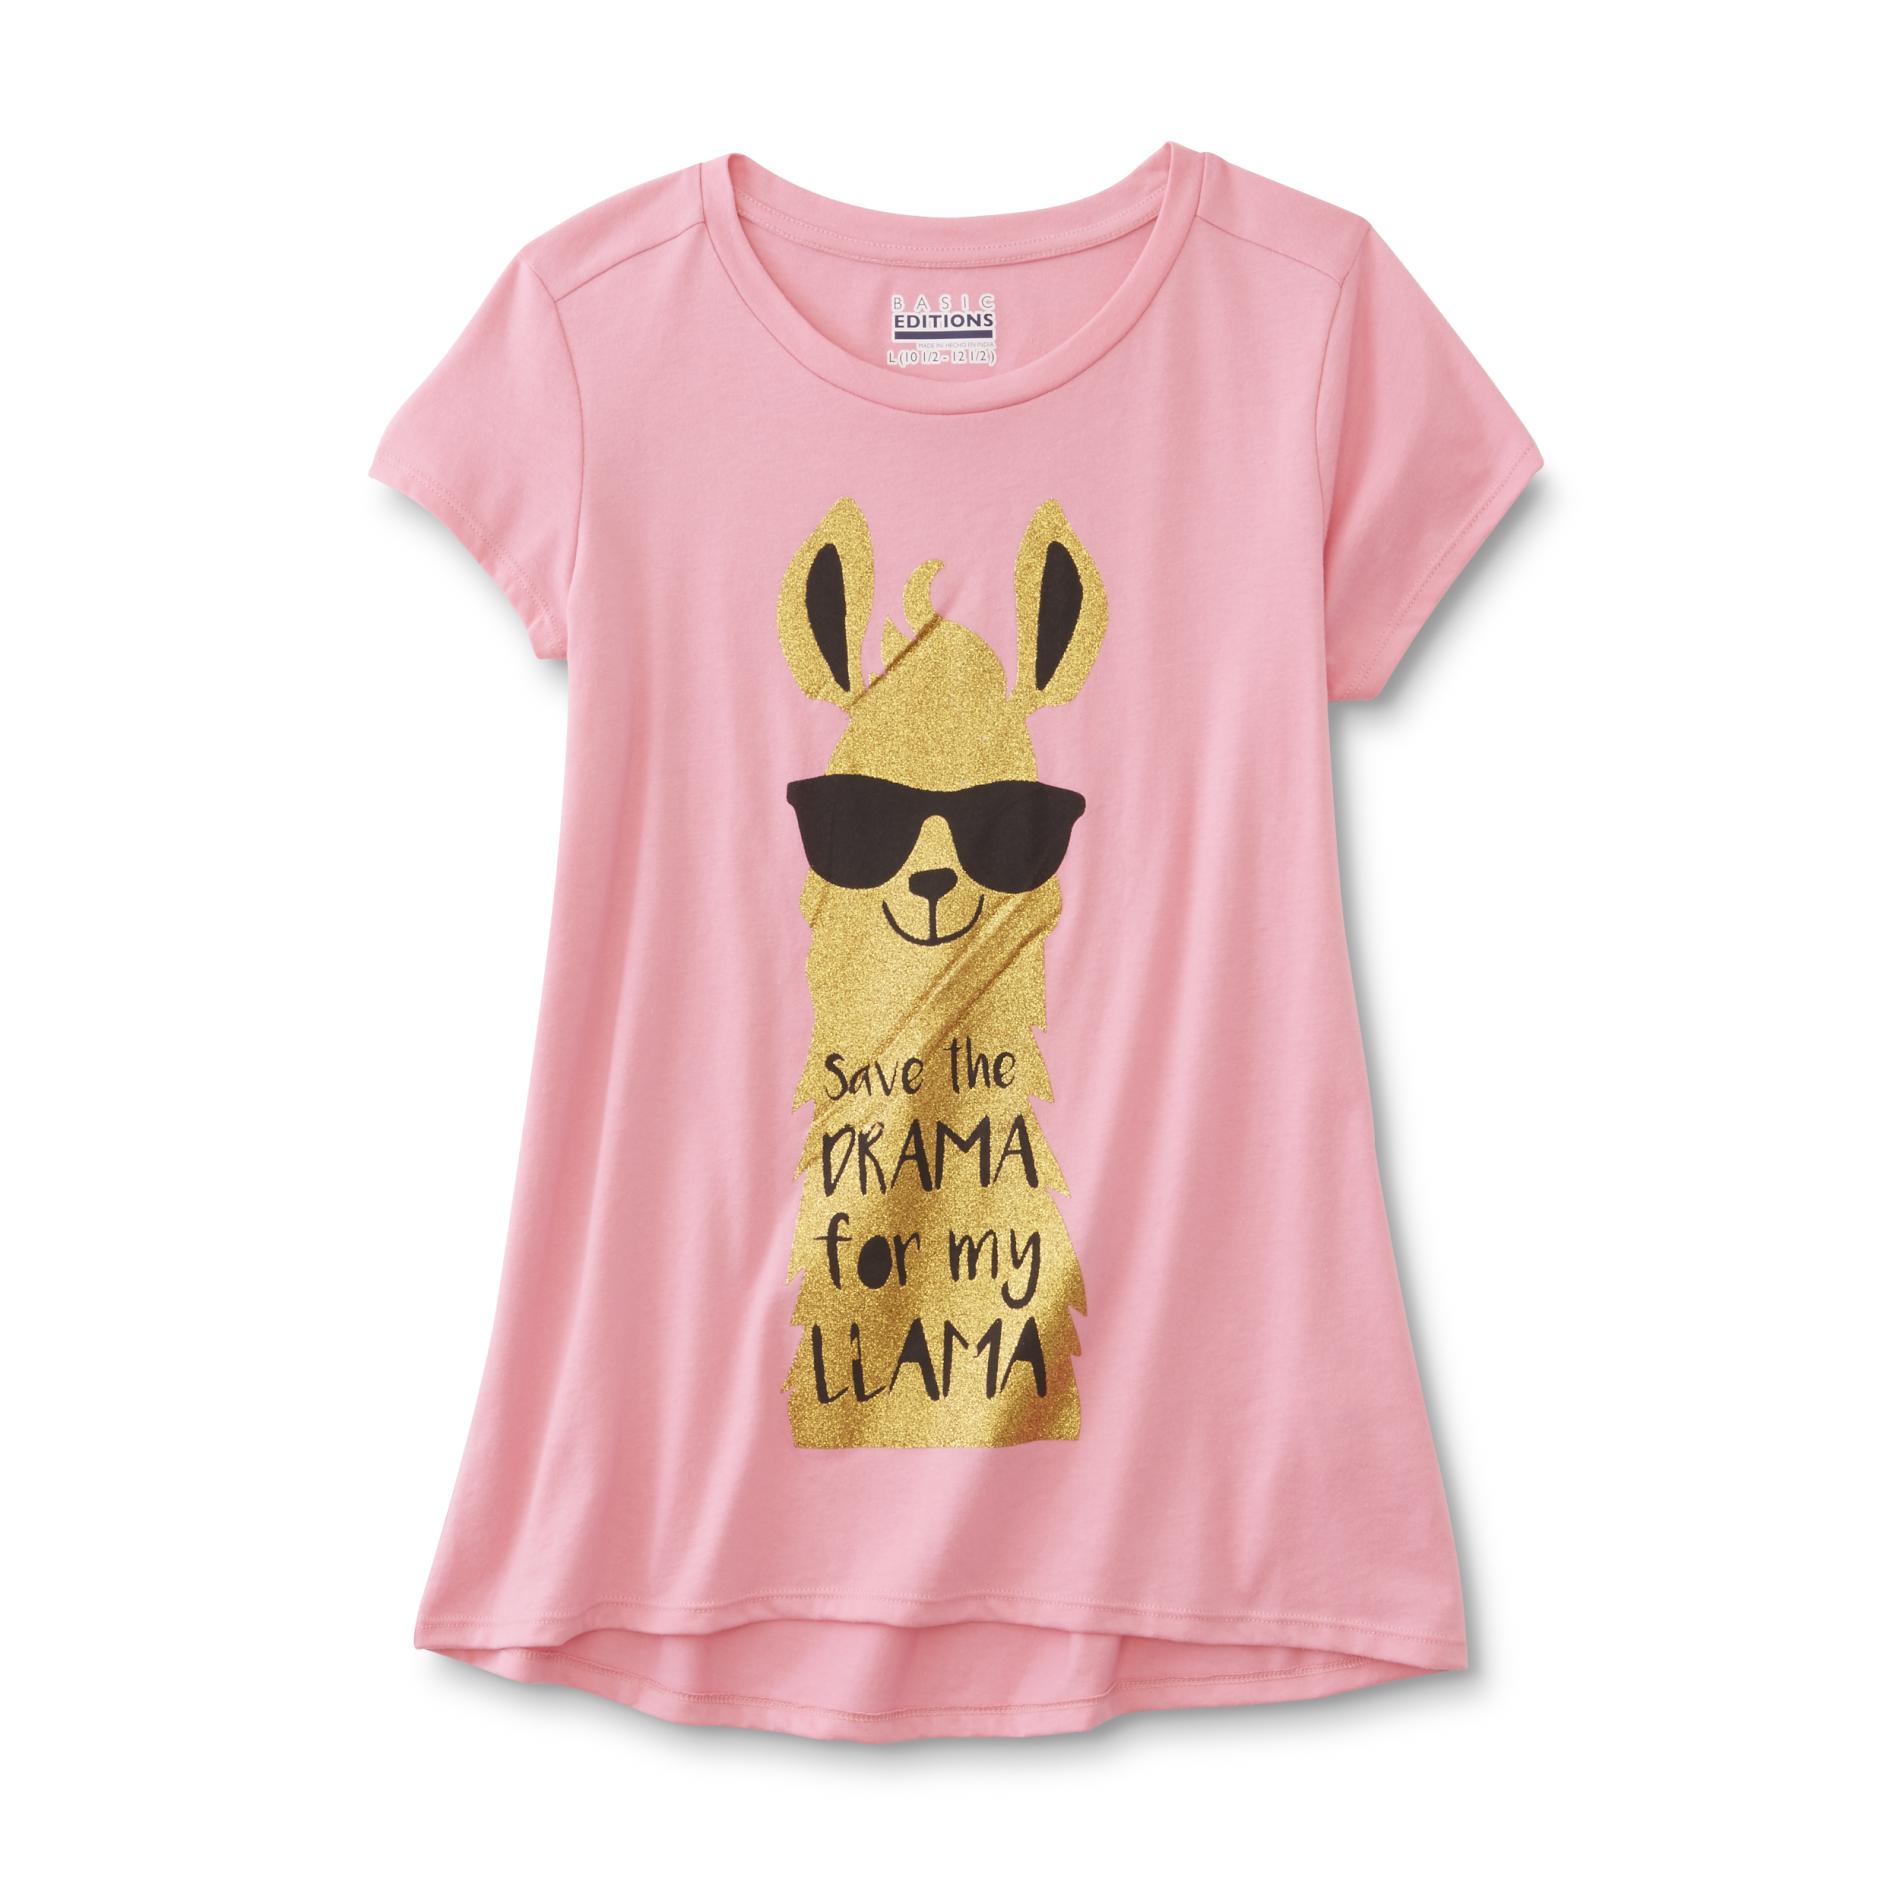 Basic Editions Girls' Graphic T-Shirt - Save The Drama Llama